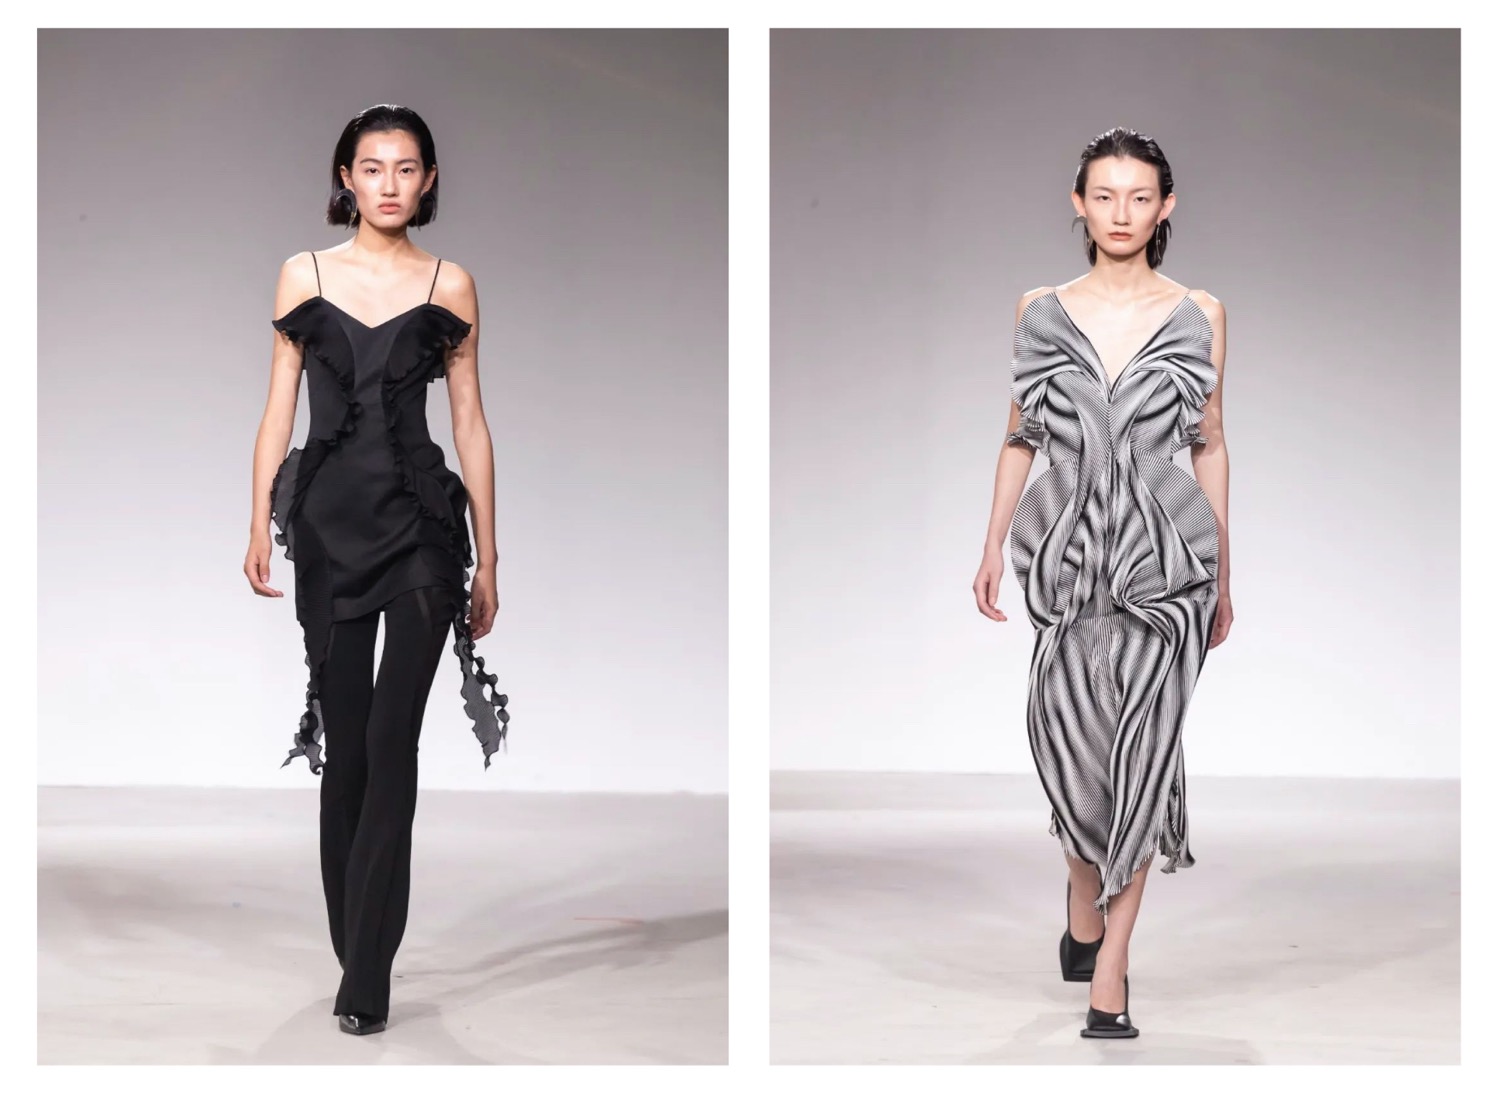 Shanghai Fashion Day lights up Milanese catwalk - SHINE News